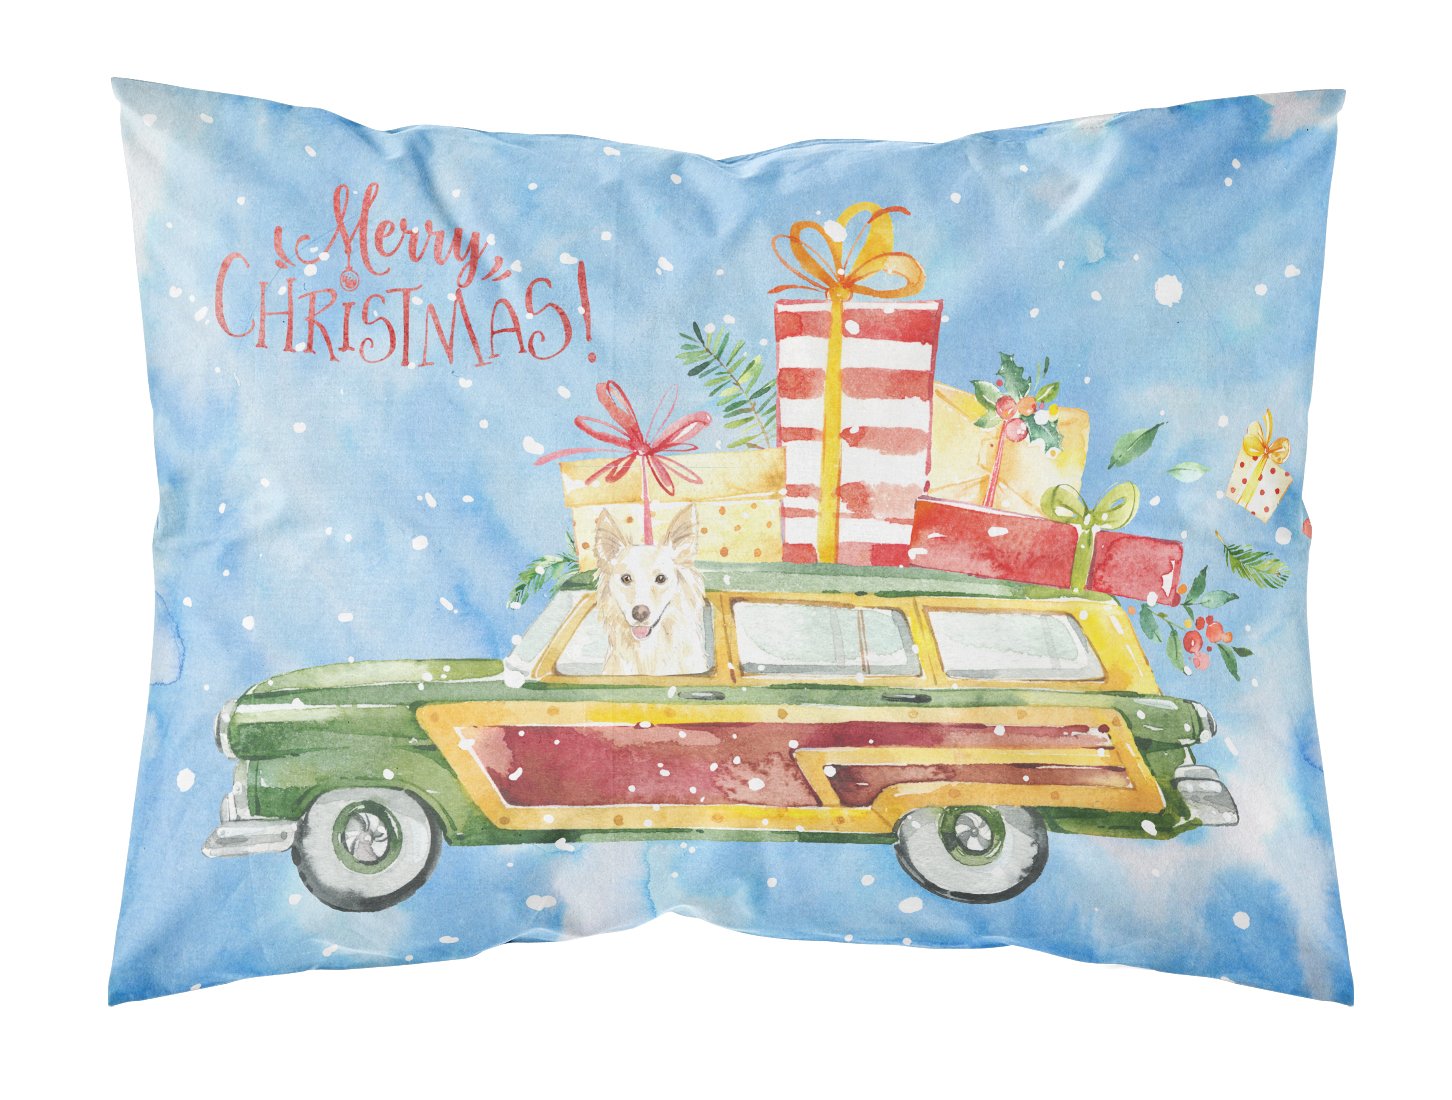 Merry Christmas White Collie Fabric Standard Pillowcase CK2429PILLOWCASE by Caroline's Treasures